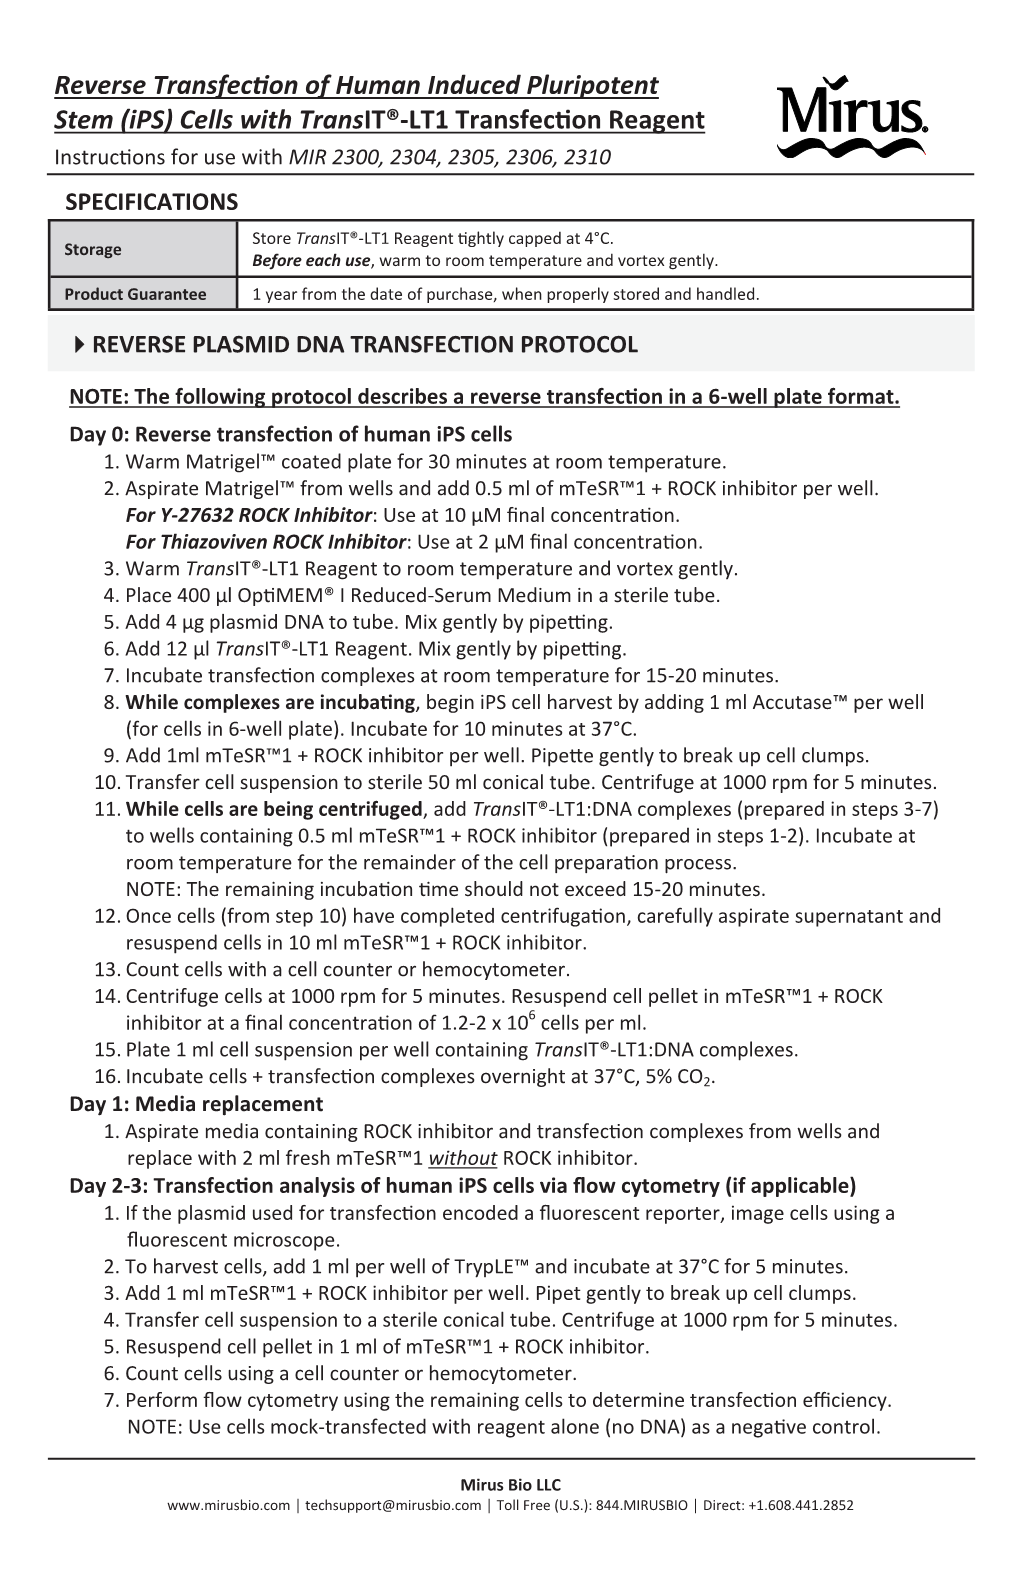 Transit®-LT1 for Ipsc Reverse Transfection